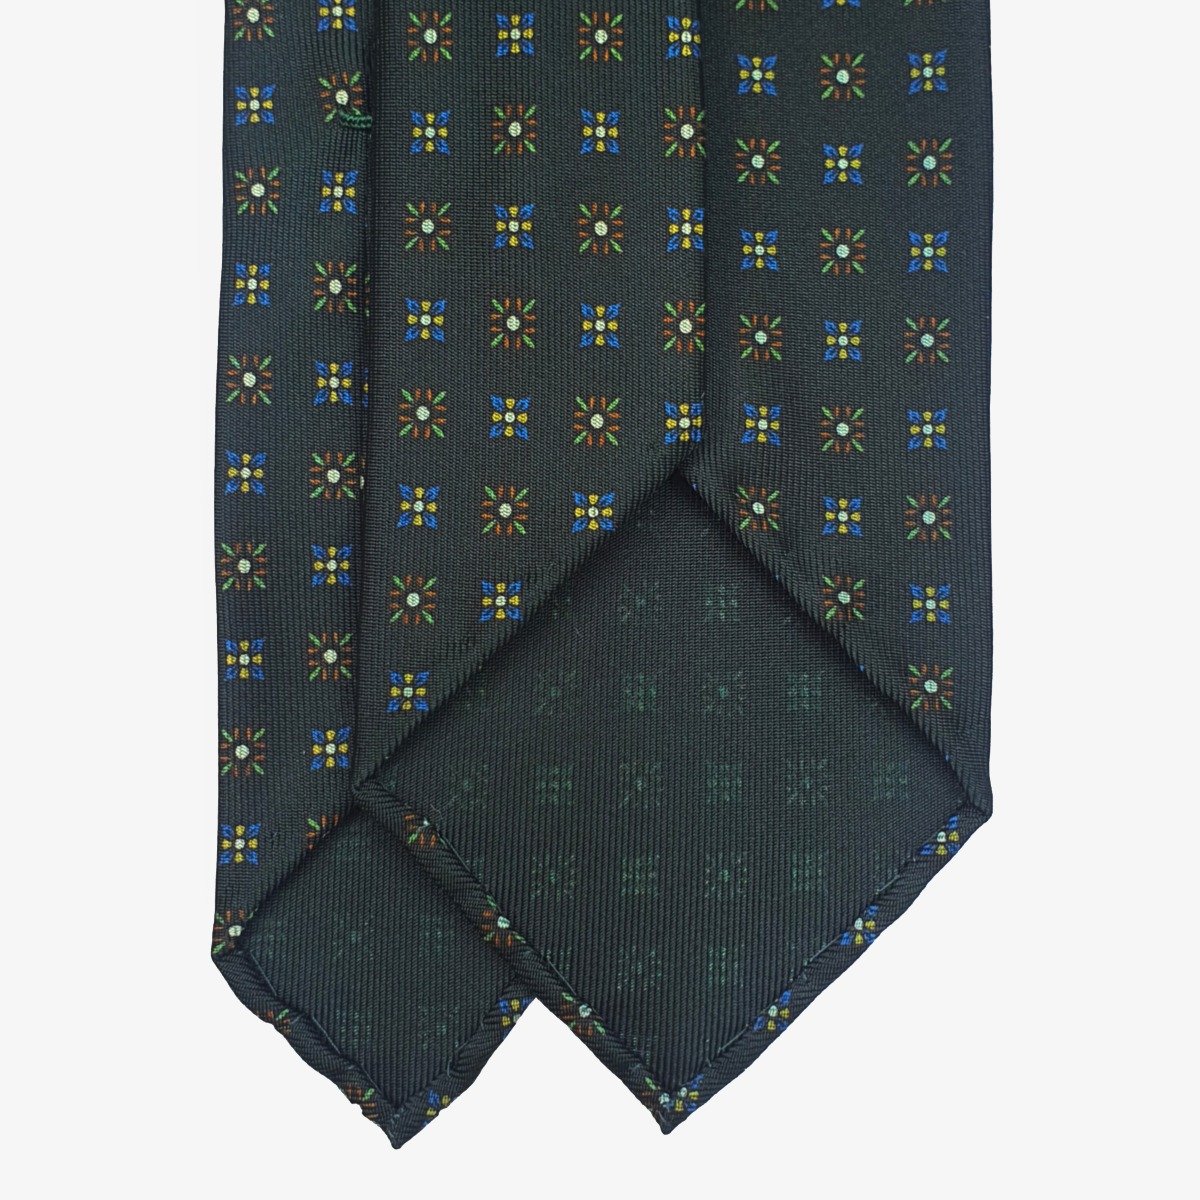 Shibumi Firenze dark green silk tie with yellow flowers